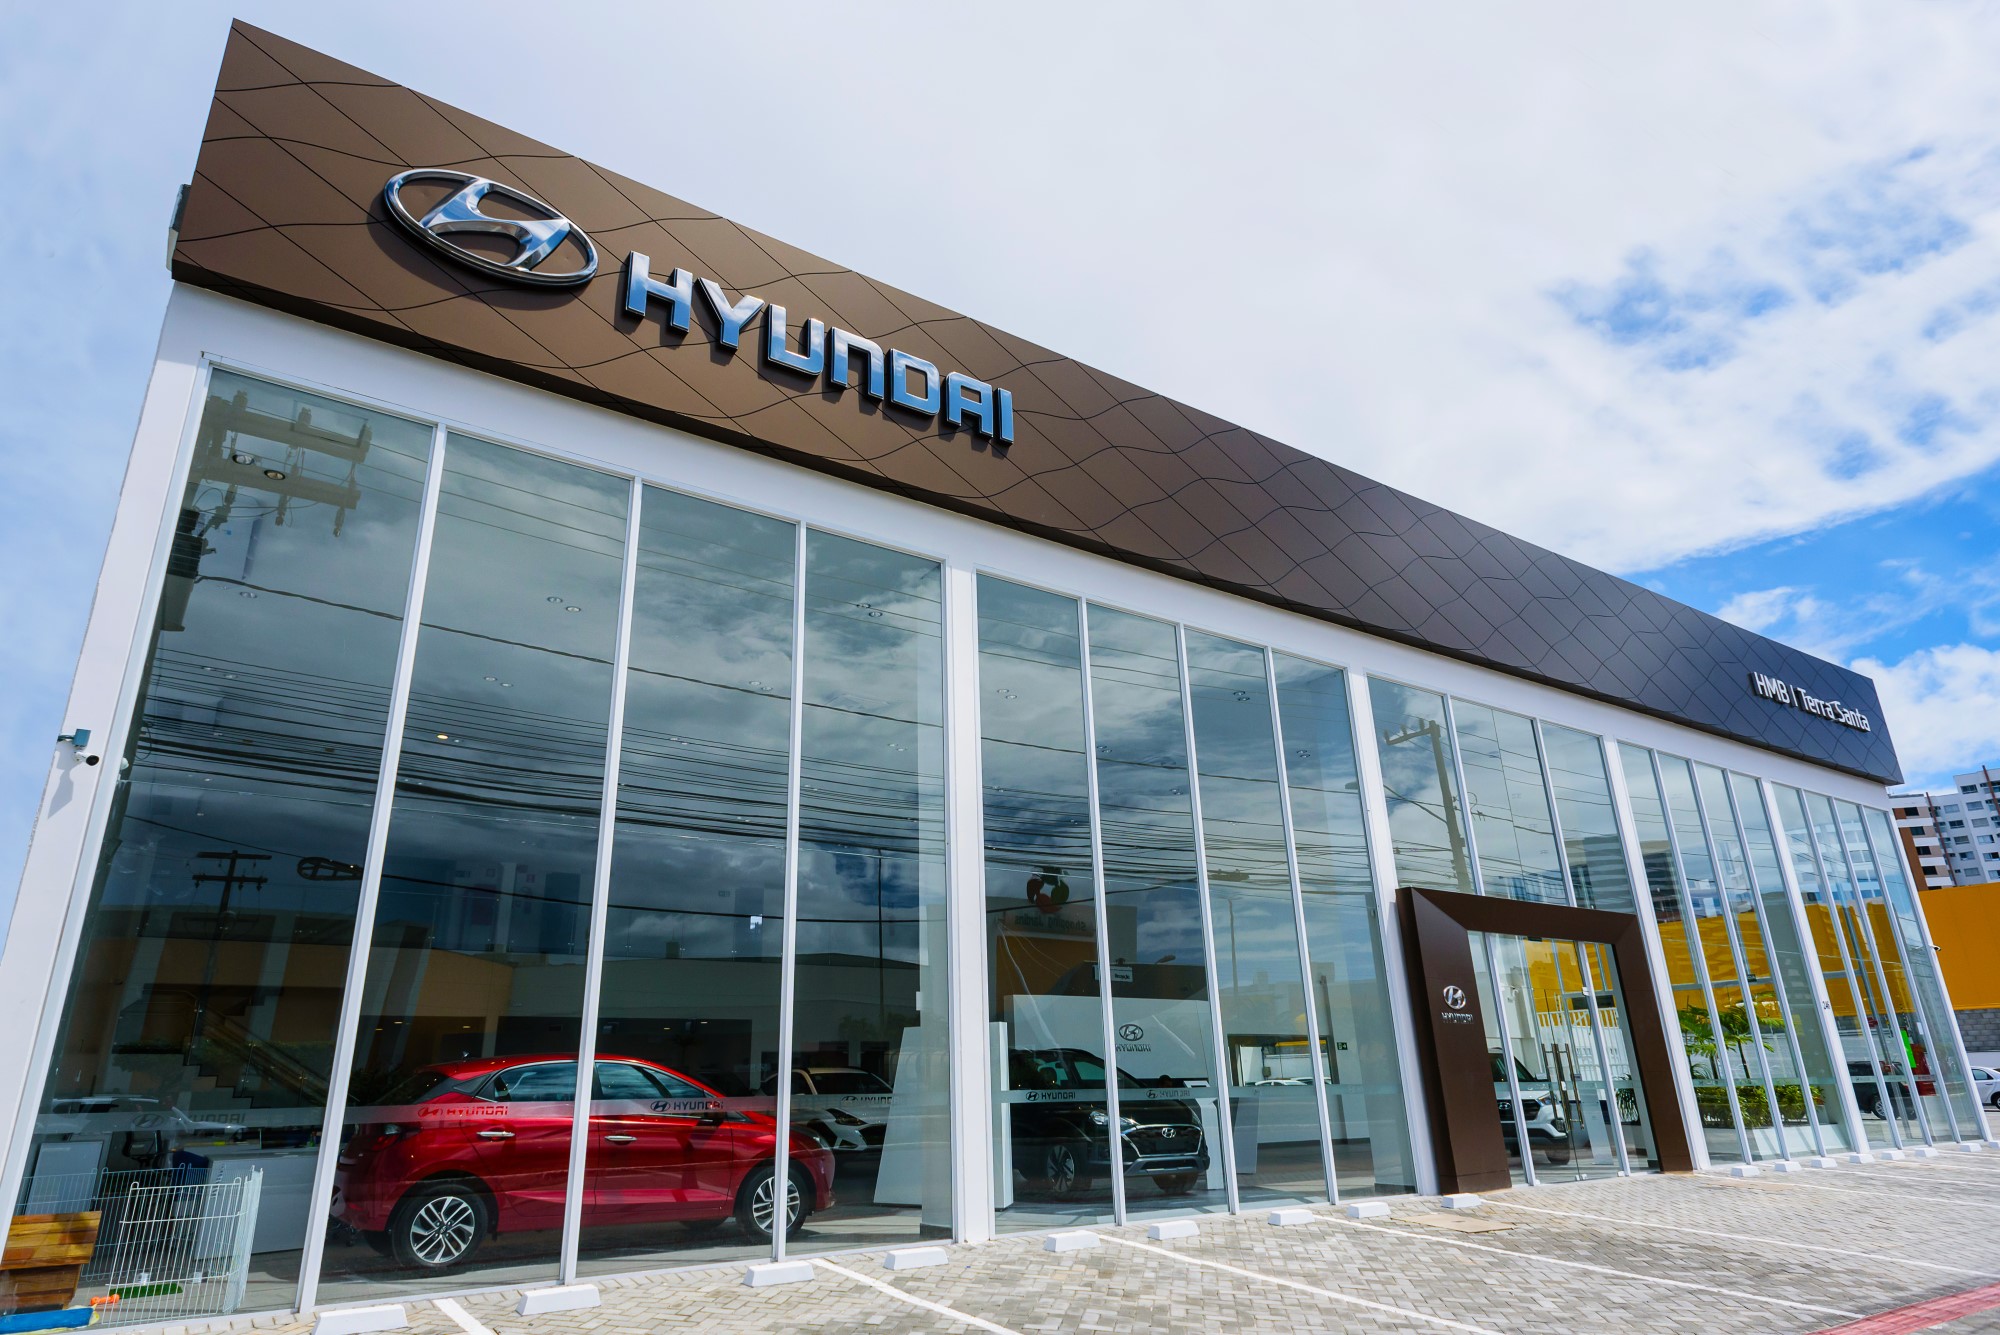 Hyundai se destaca em quinzena desastrosa